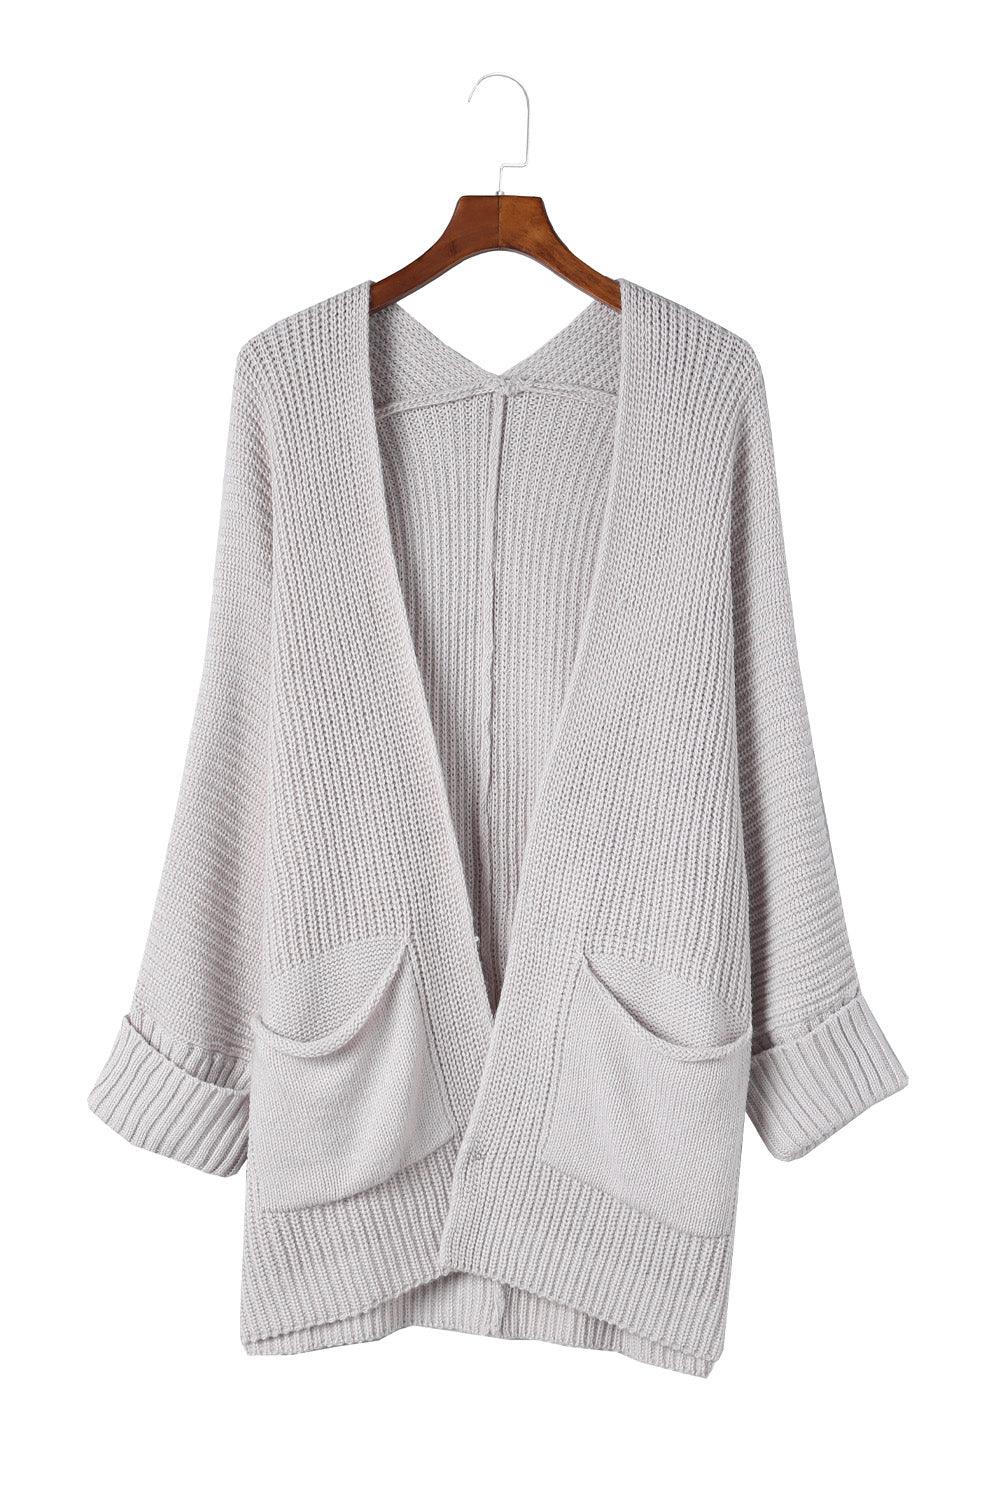 Khaki Oversized Fold Over Sleeve Sweater Cardigan - L & M Kee, LLC